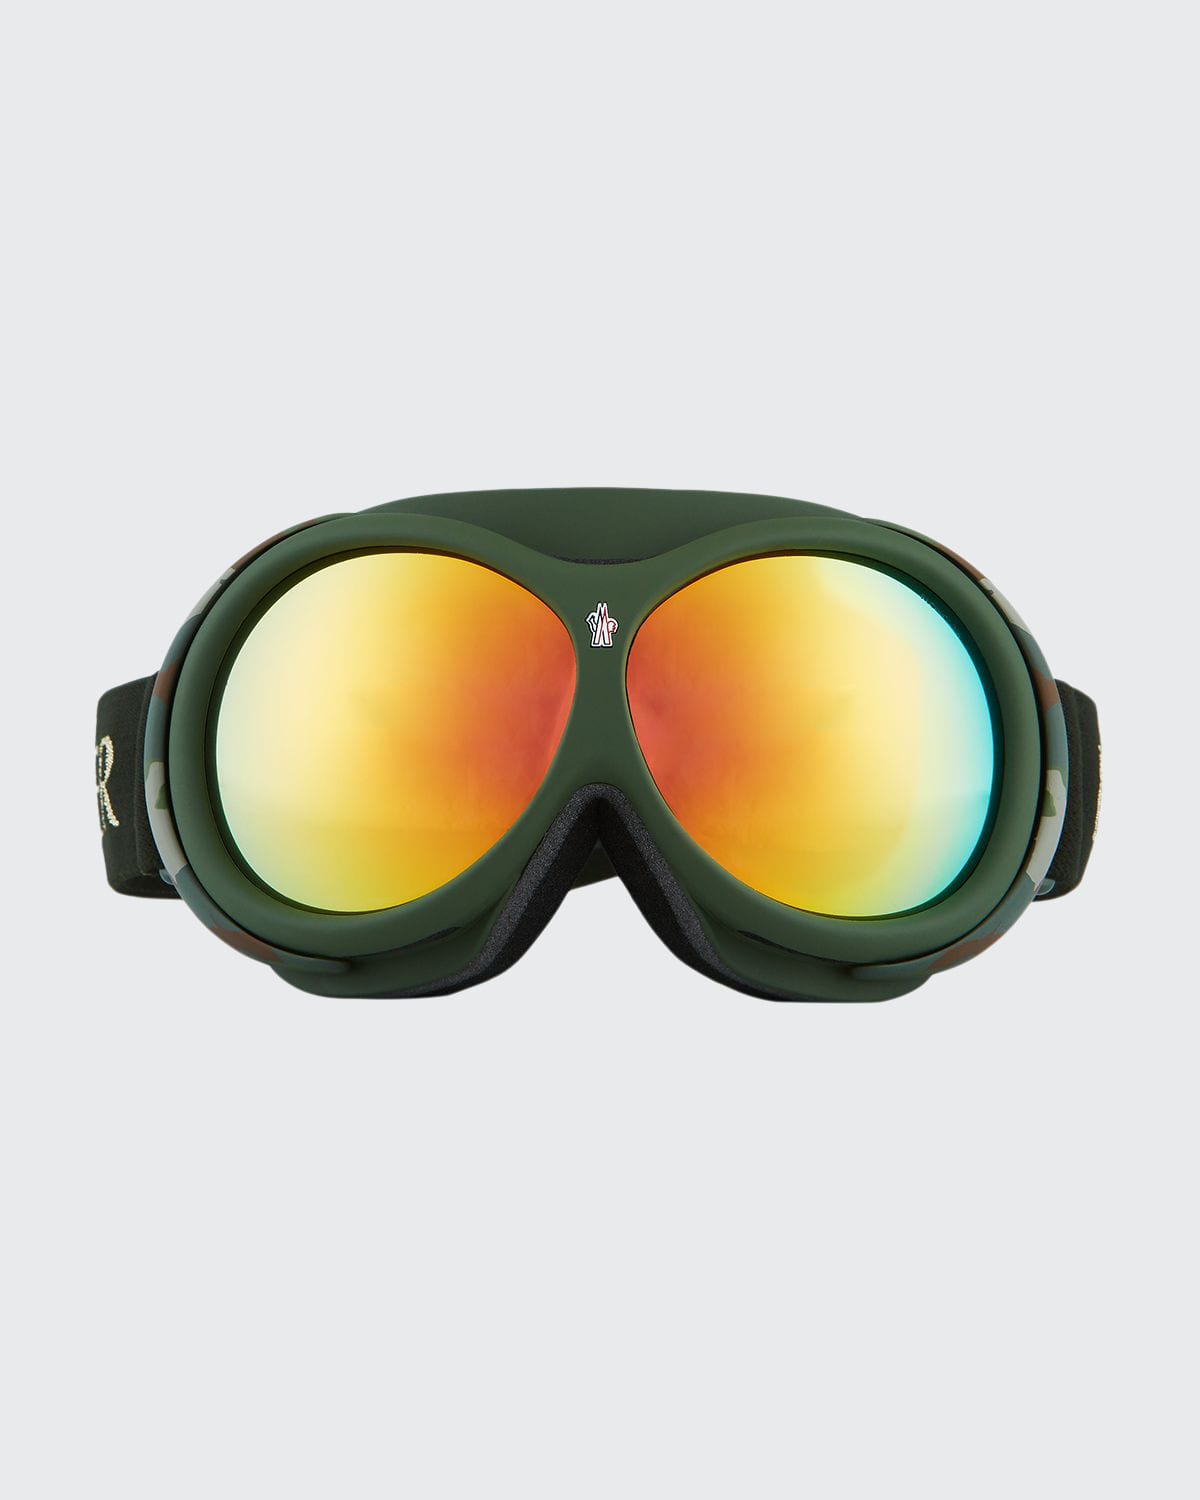 Moncler - Mirrored Ski Goggles - Black Moncler